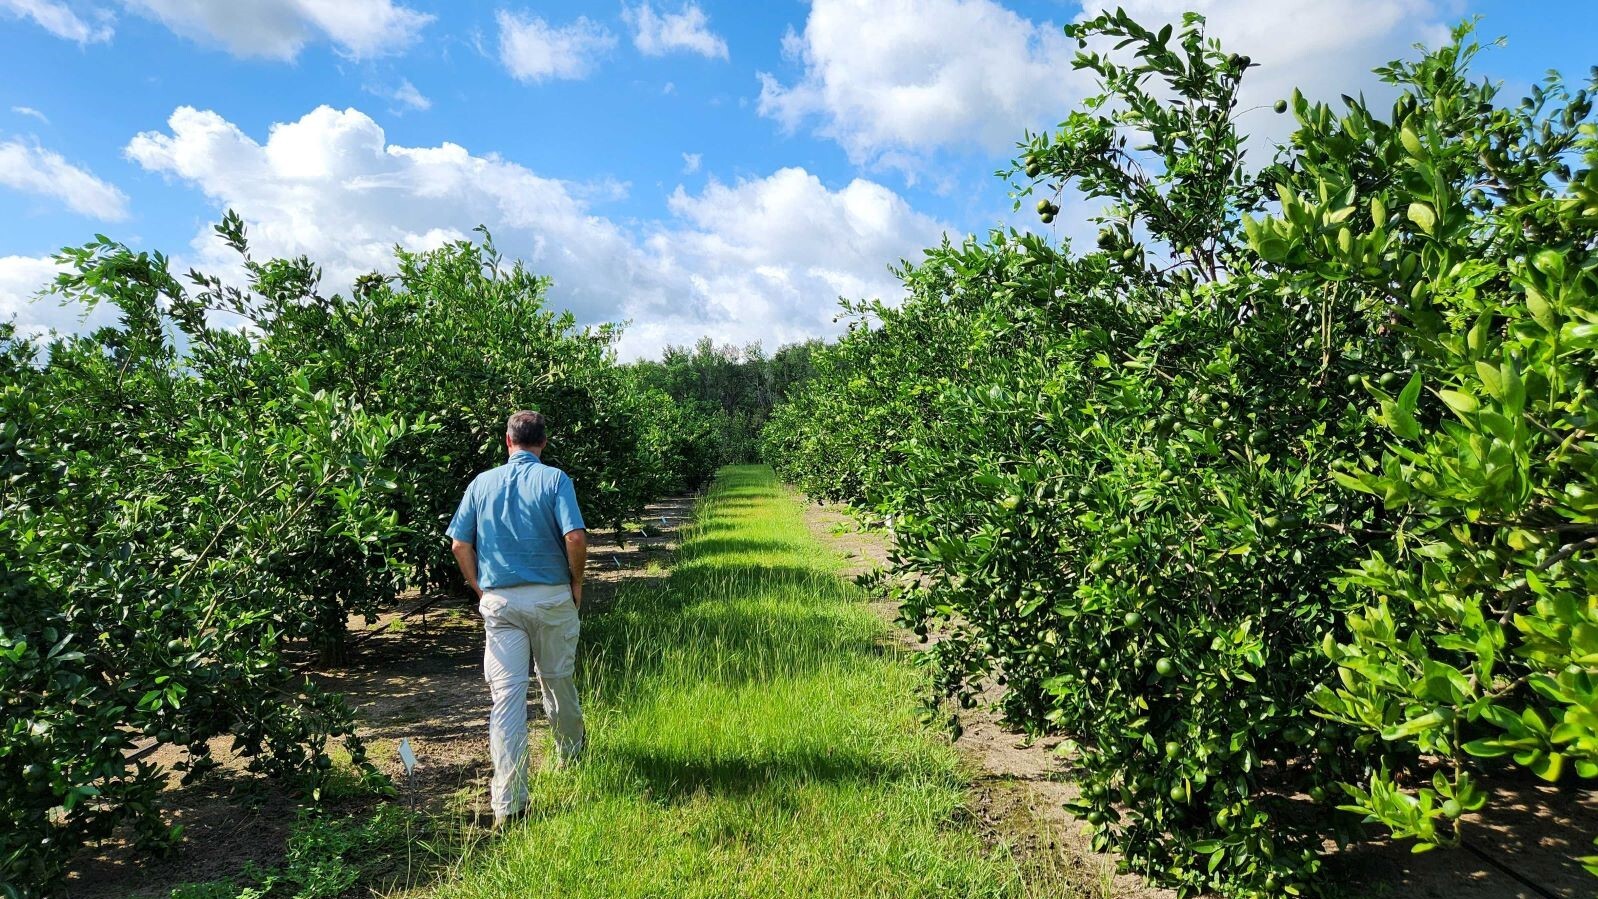 A man is shown walking through a grove of citrus trees.